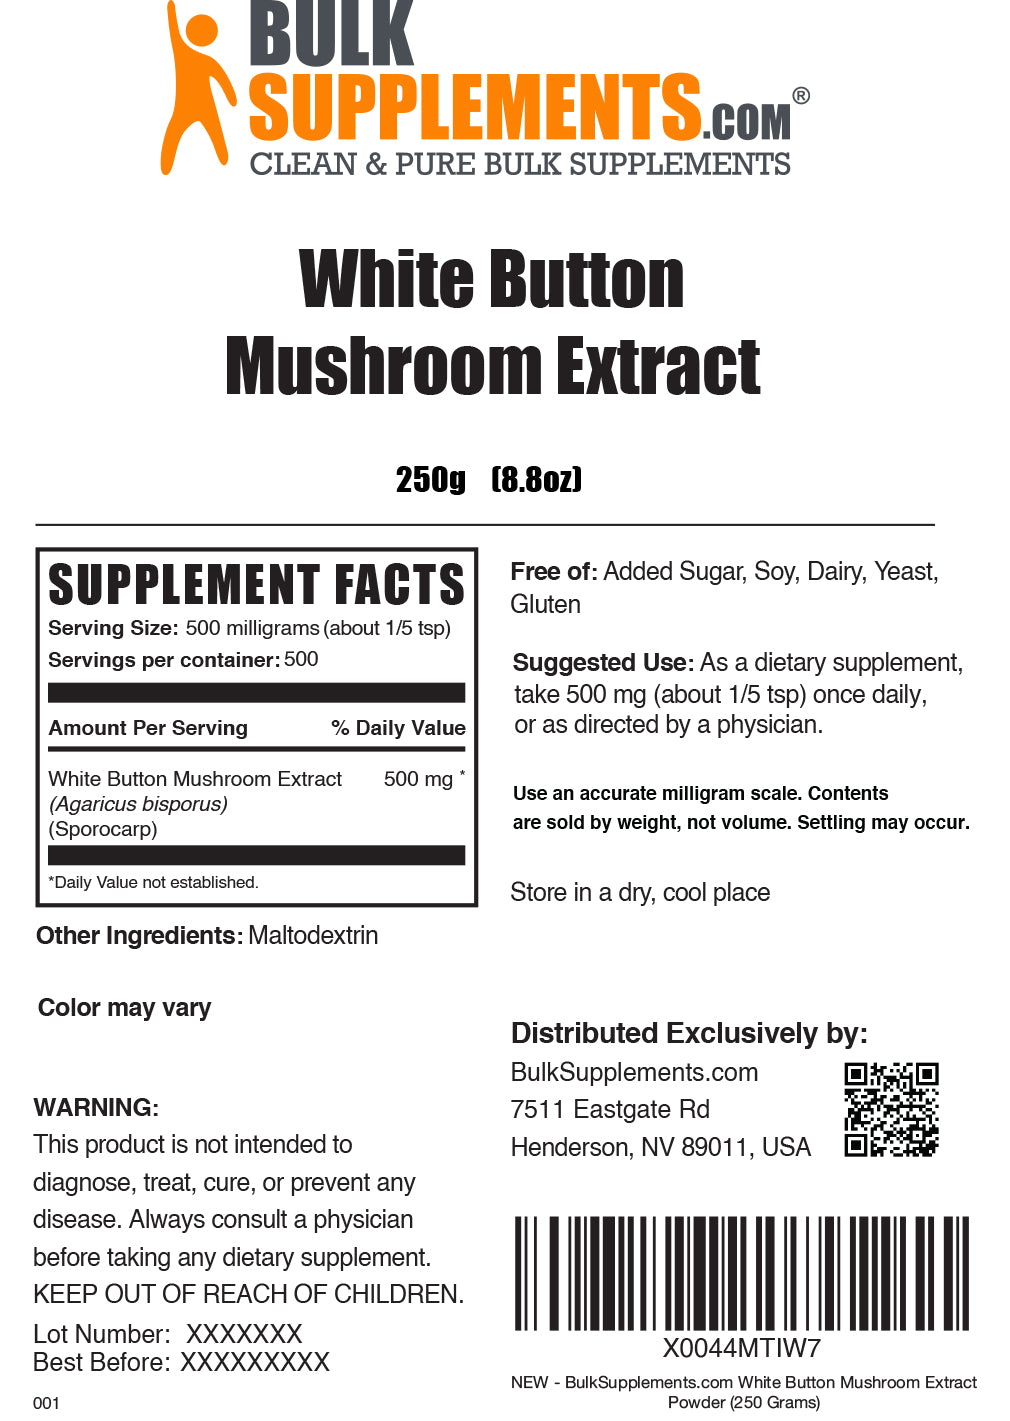 White button mushroom extract powder label 250g